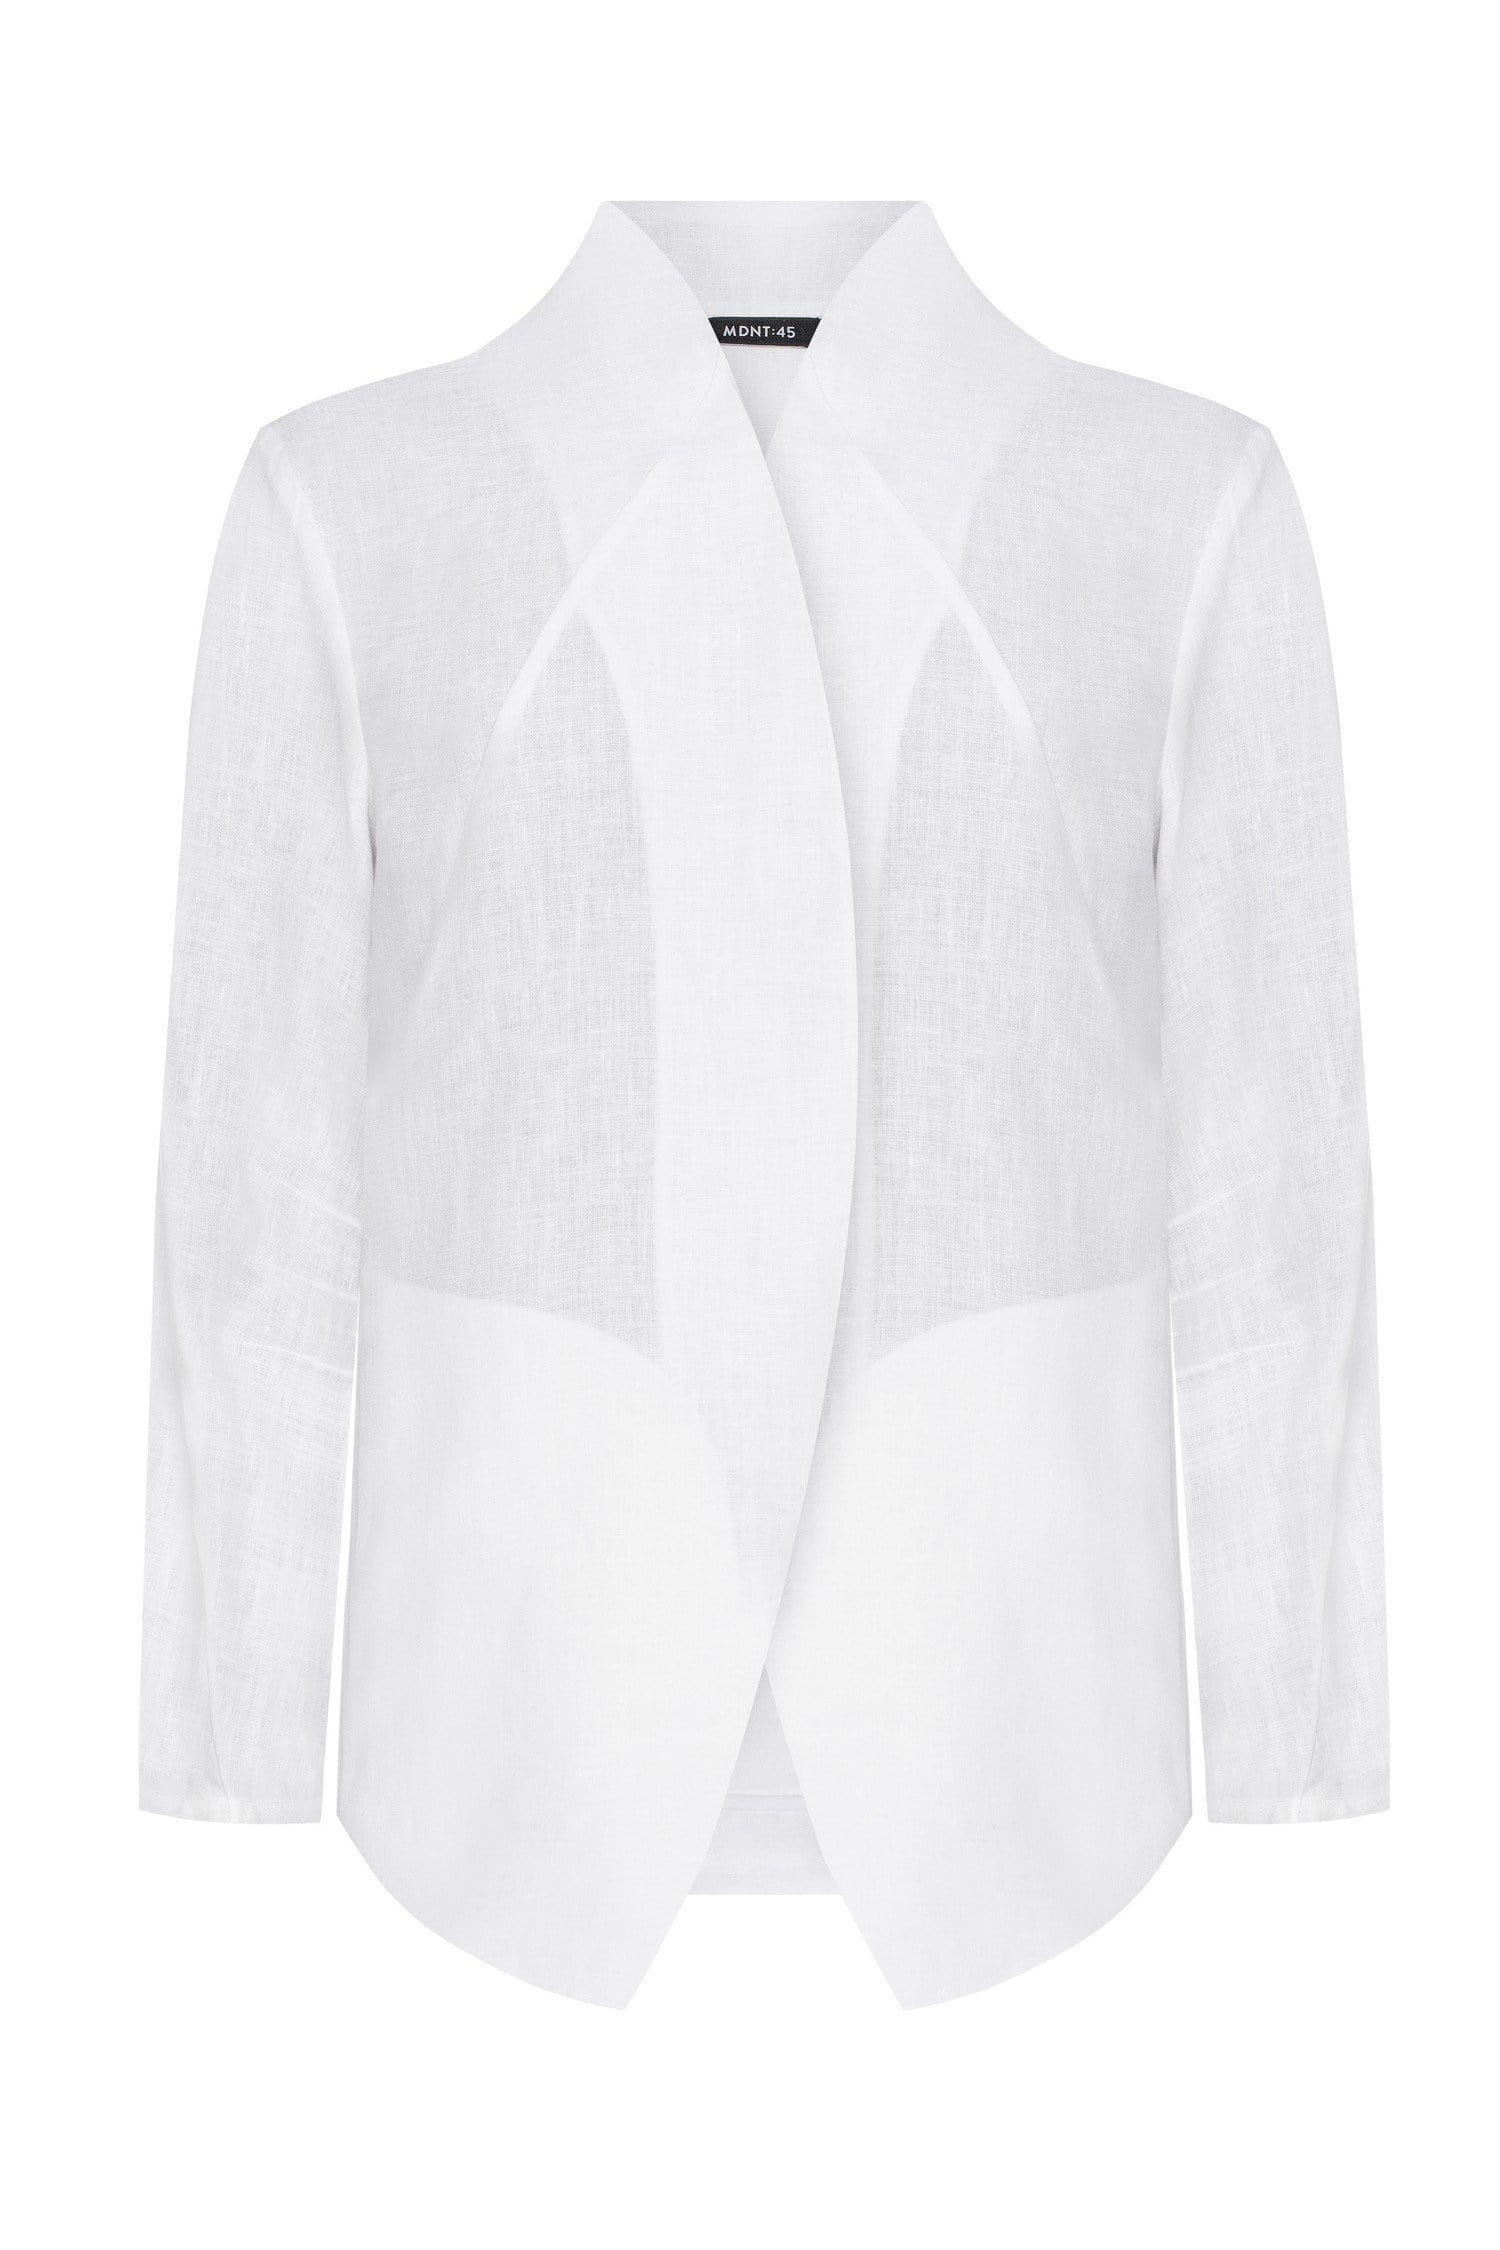 MDNT45 Reberu jacket White